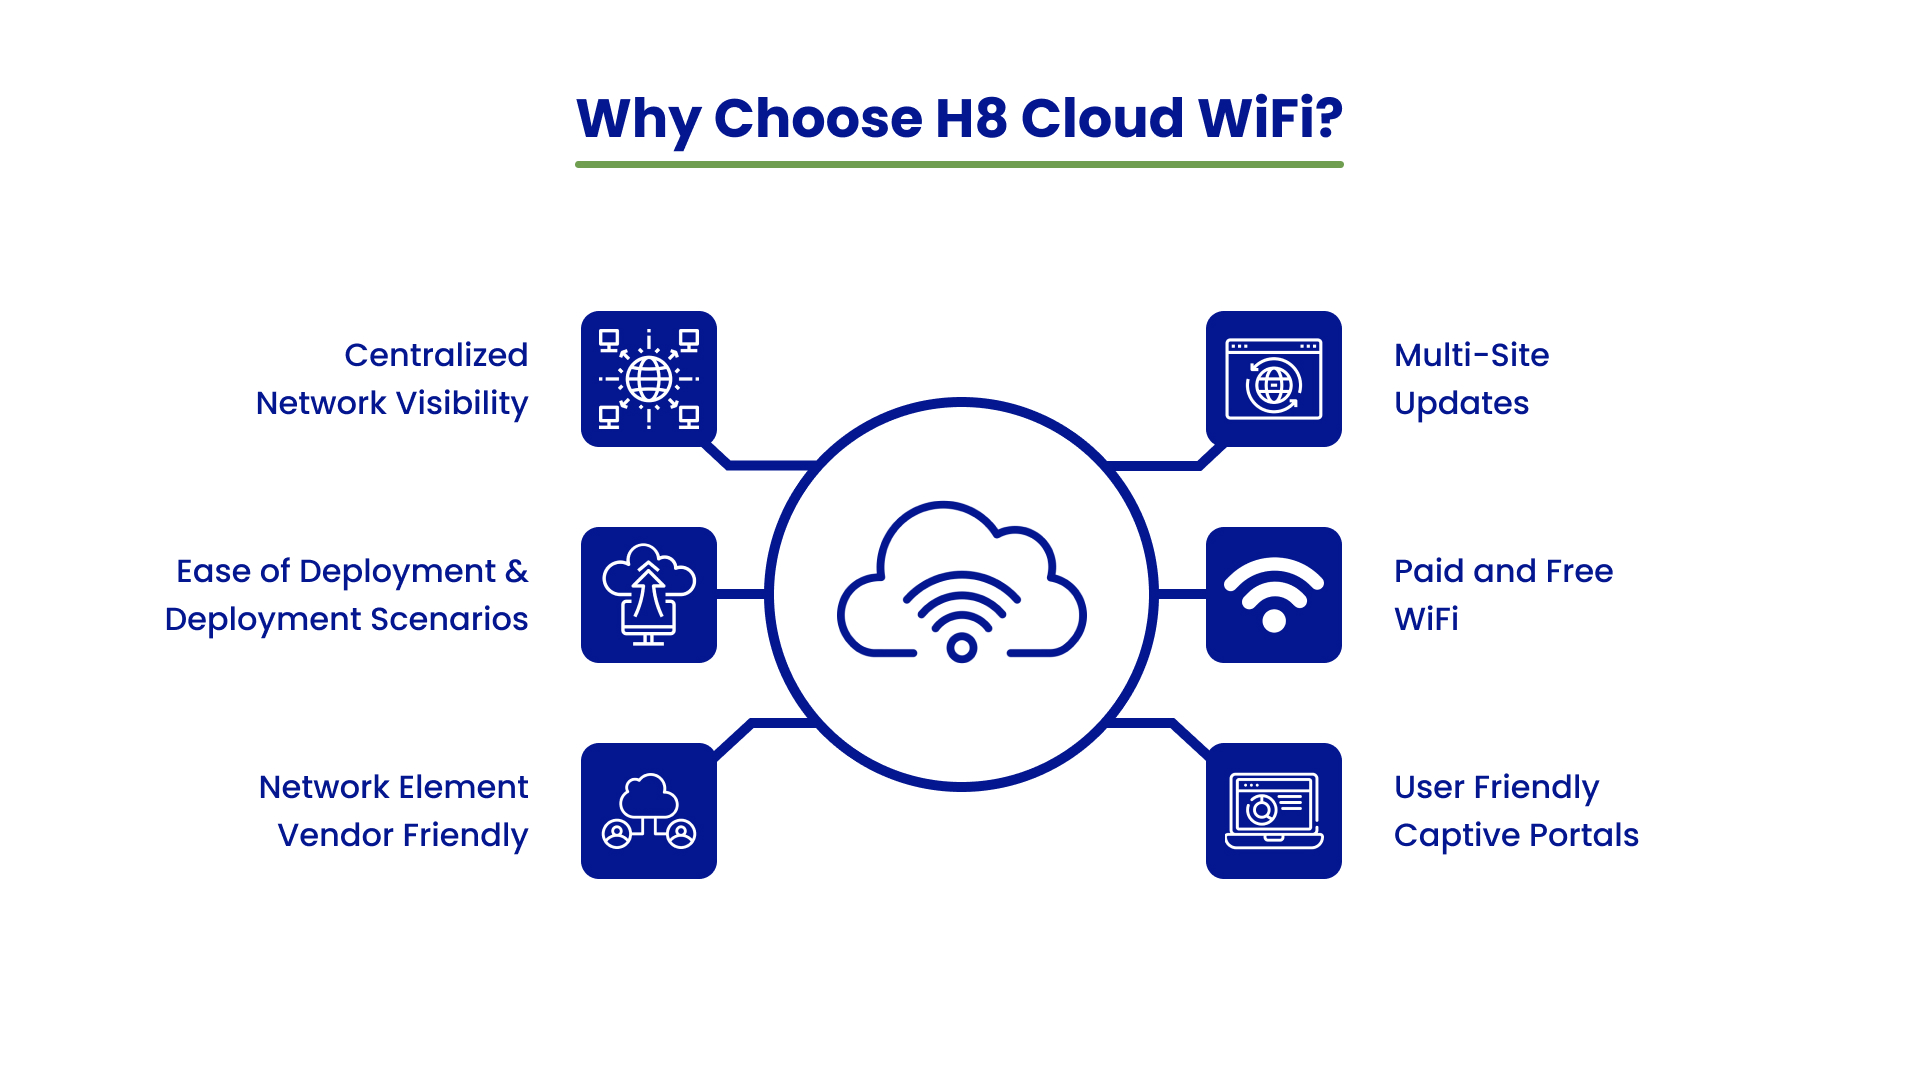 H8 Cloud WiFi